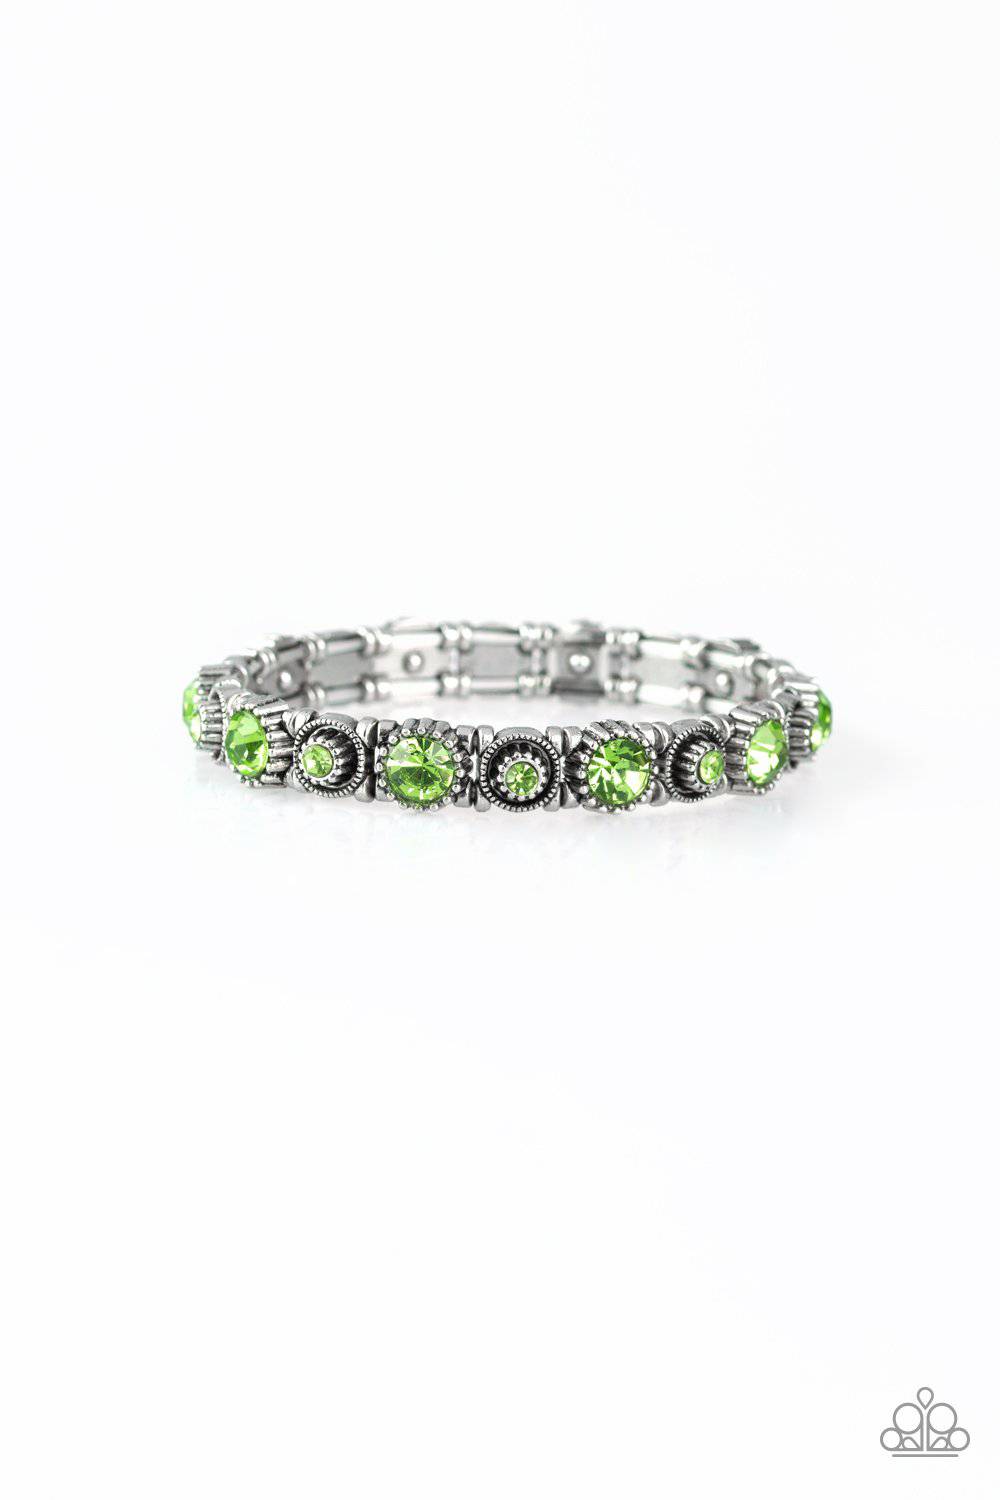 Heavy On The Sparkle - Green Rhinestone Bracelet - Paparazzi Accessories - GlaMarous Titi Jewels